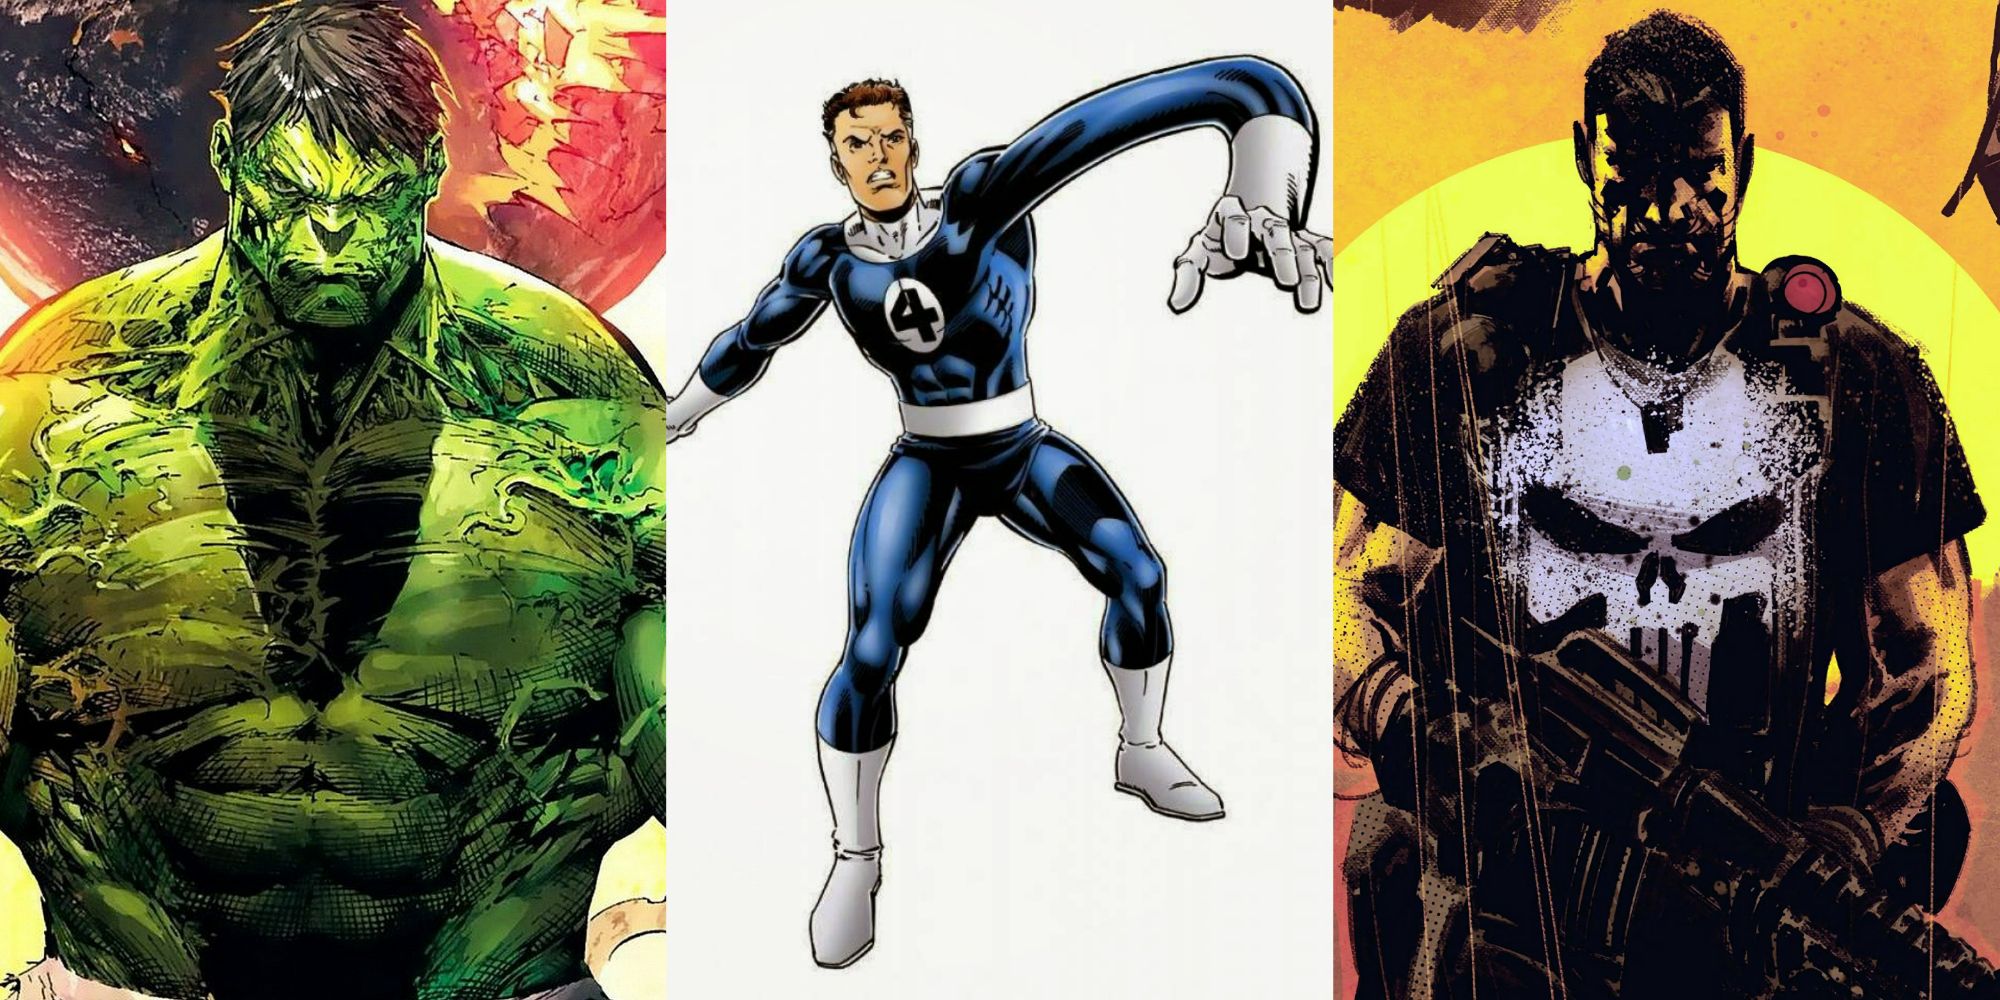 A split image of The Hulk, Mister Fantastic, and Punisher in Marvel Comics